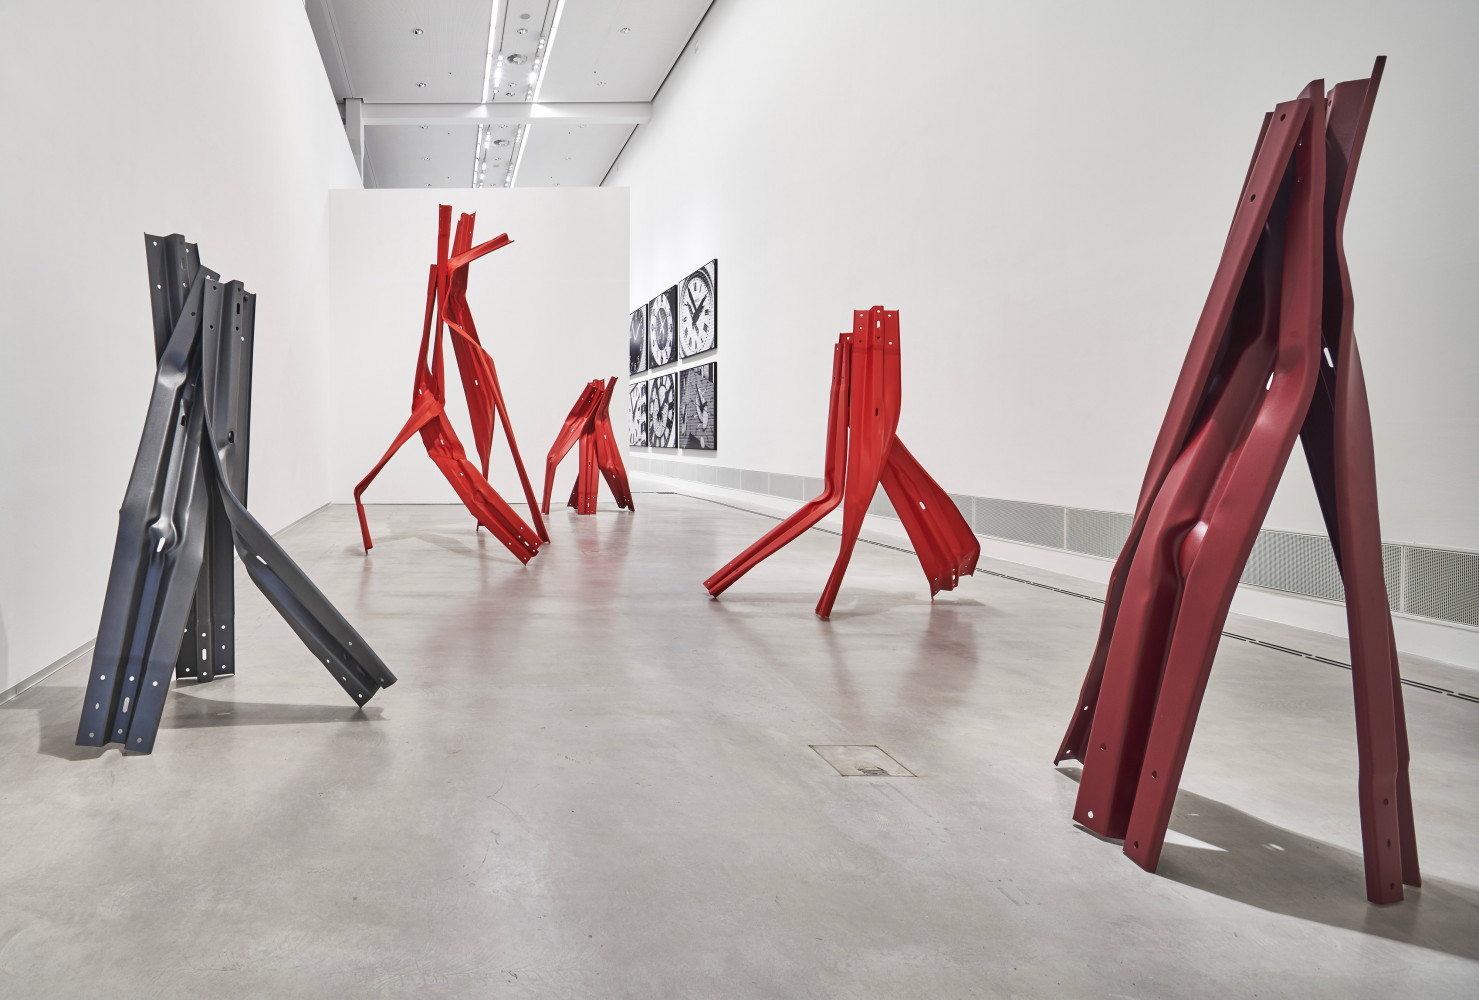 Bettina Pousttchi, ‘In Recent Years, Berlinische Galerie – Museum for Modern Art Berlin’, Installation view, 2019